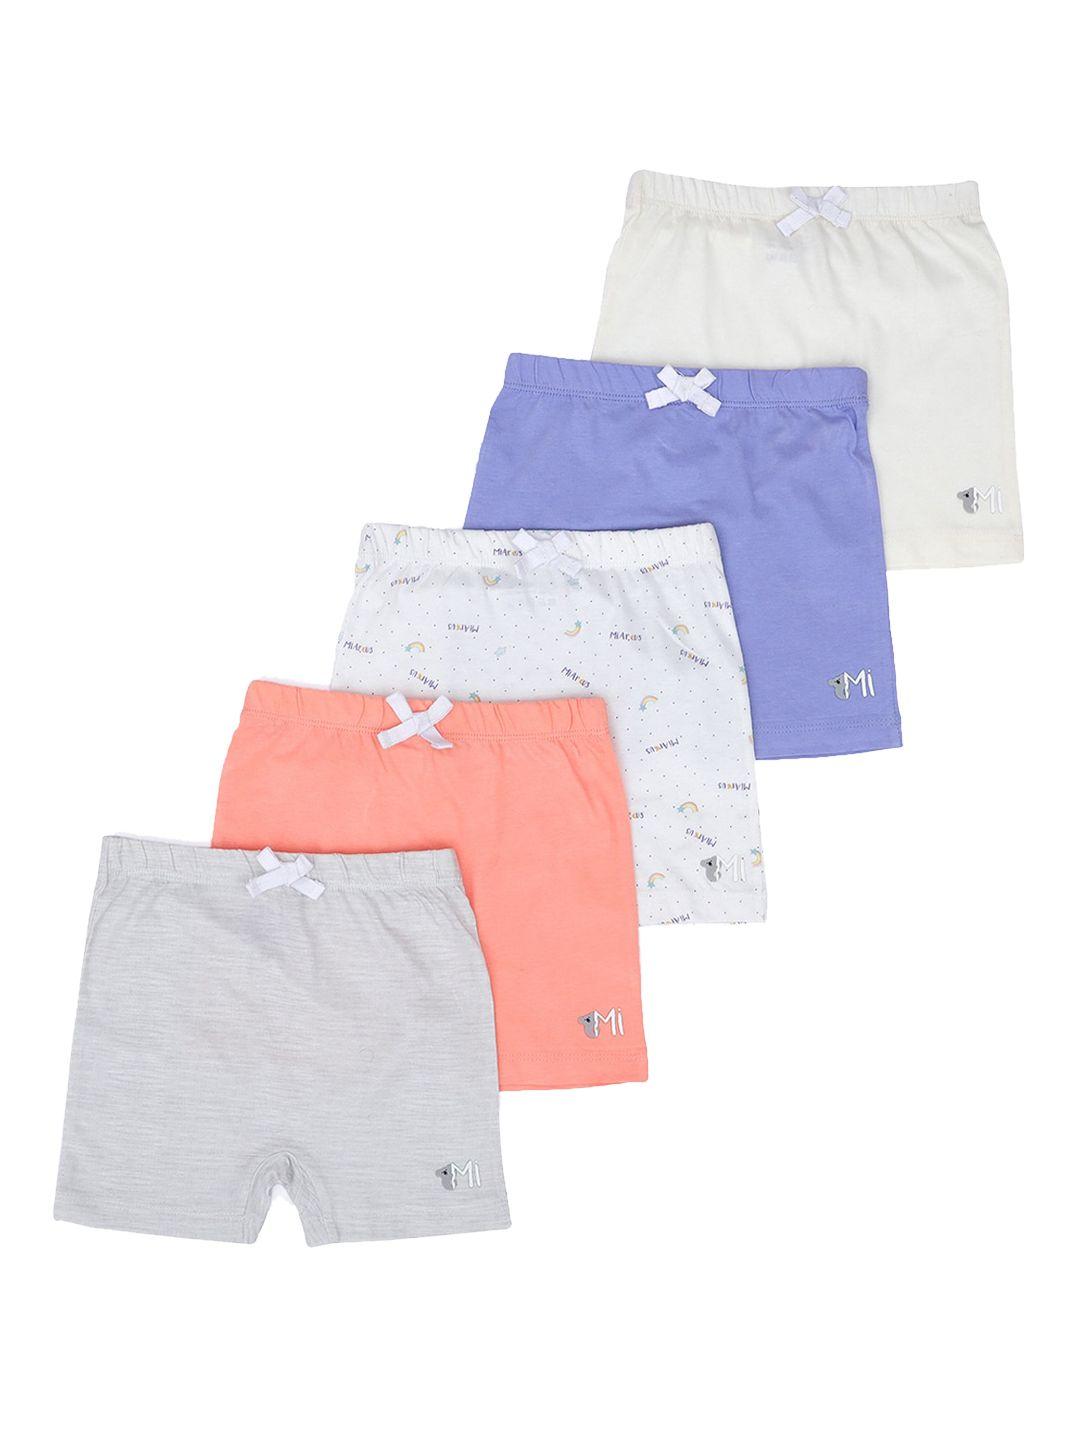 miarcus unisex kids pack of 5 multicoloured slim fit shorts